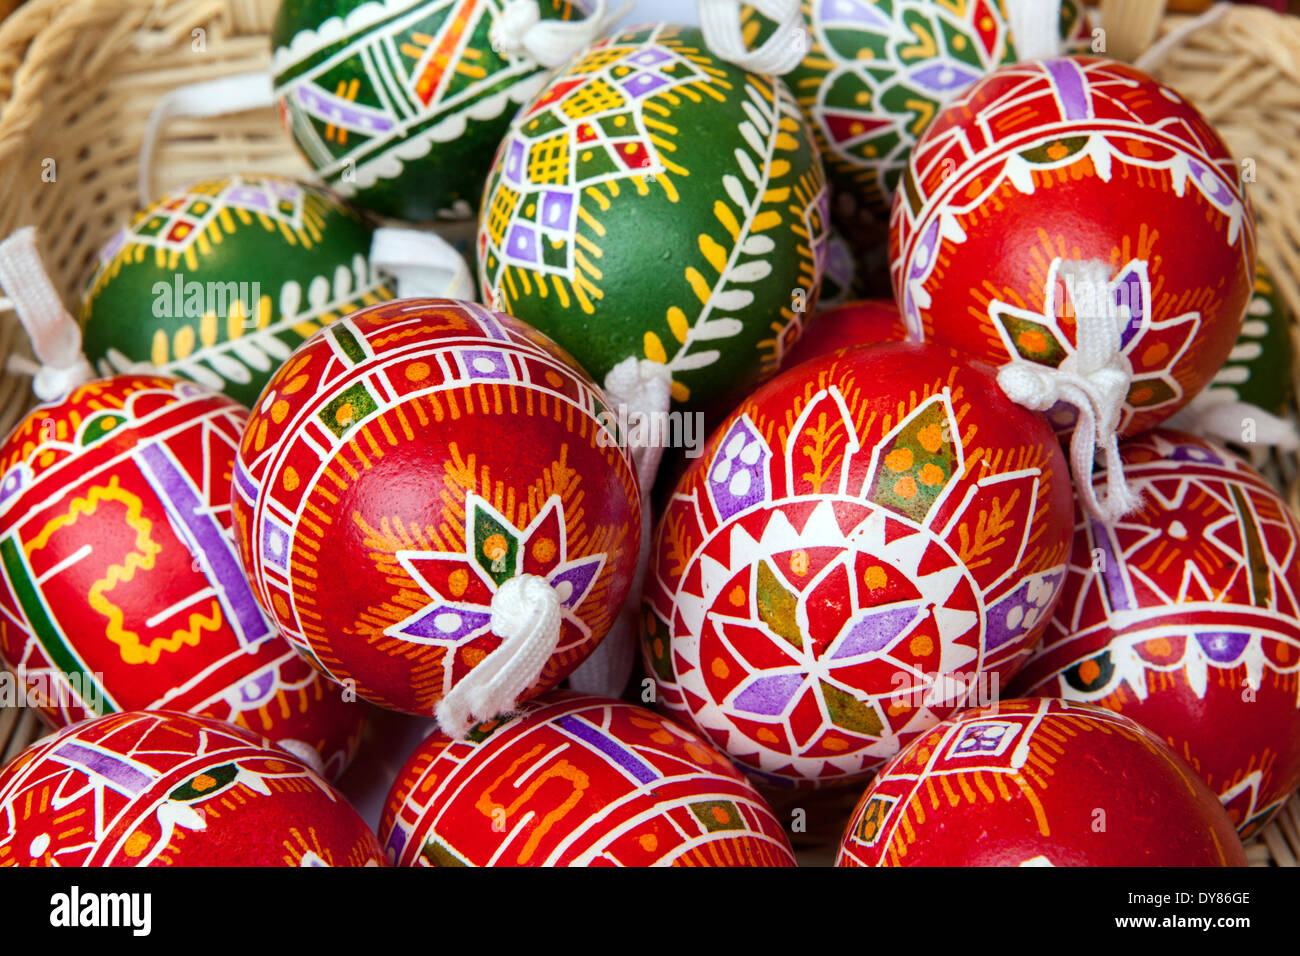 Original Czech Easter Eggs, Painted Eggs in a basket, Prague Czech Republic  Stock Photo - Alamy